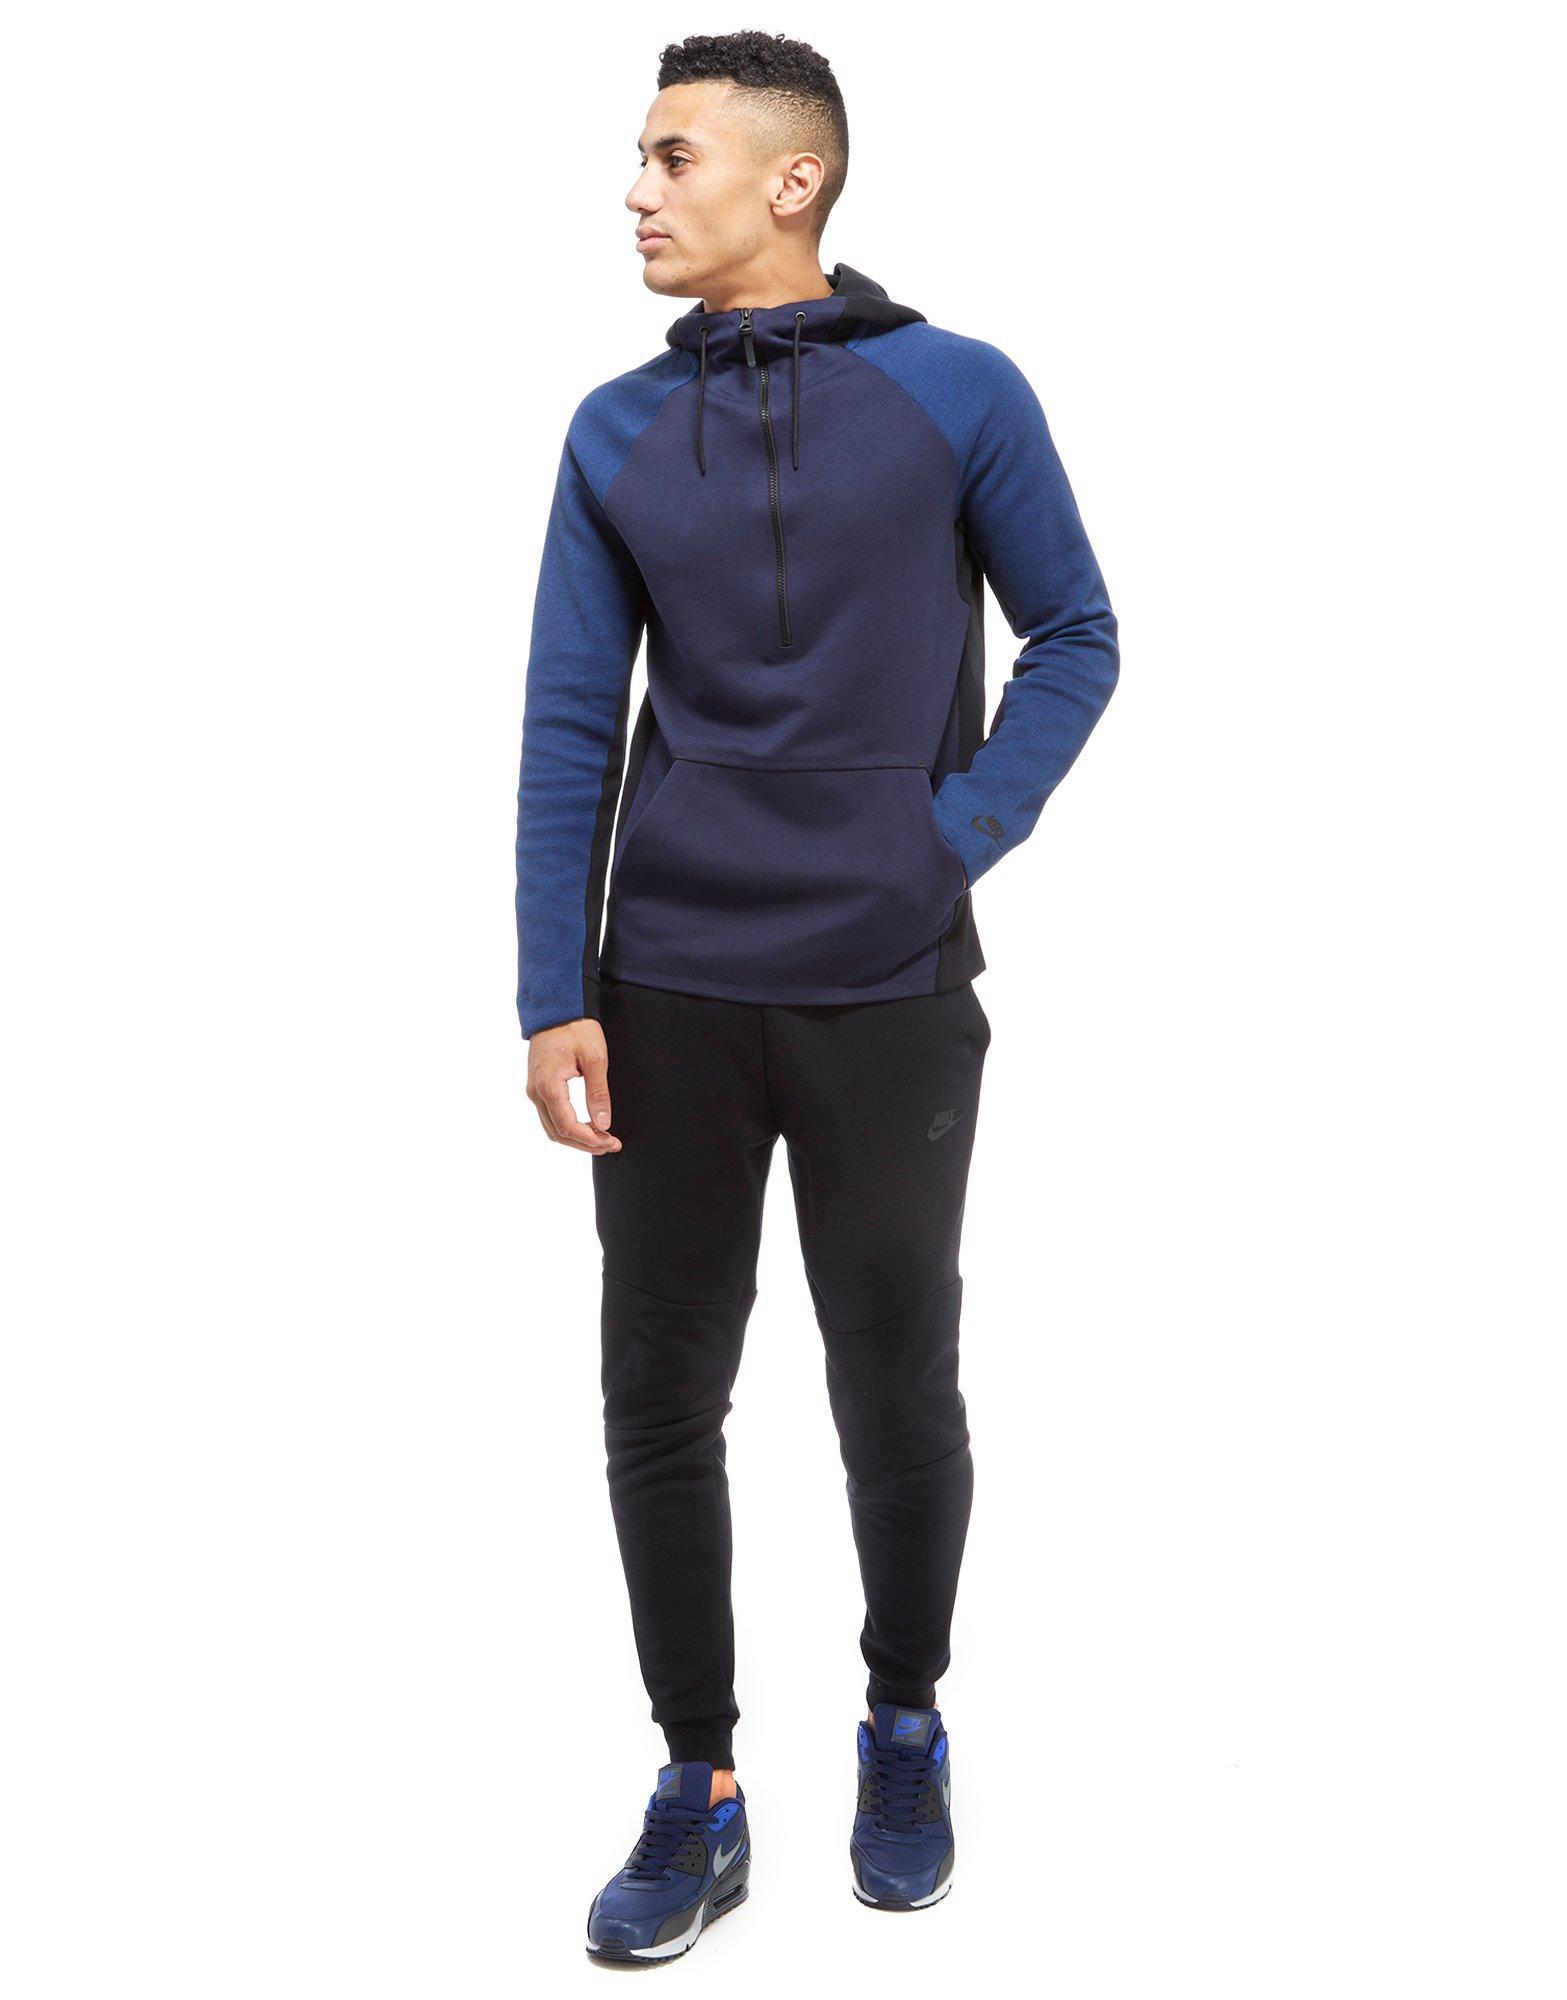 Lyst - Nike Tech Colour Block Half Zip Hoody in Blue for Men